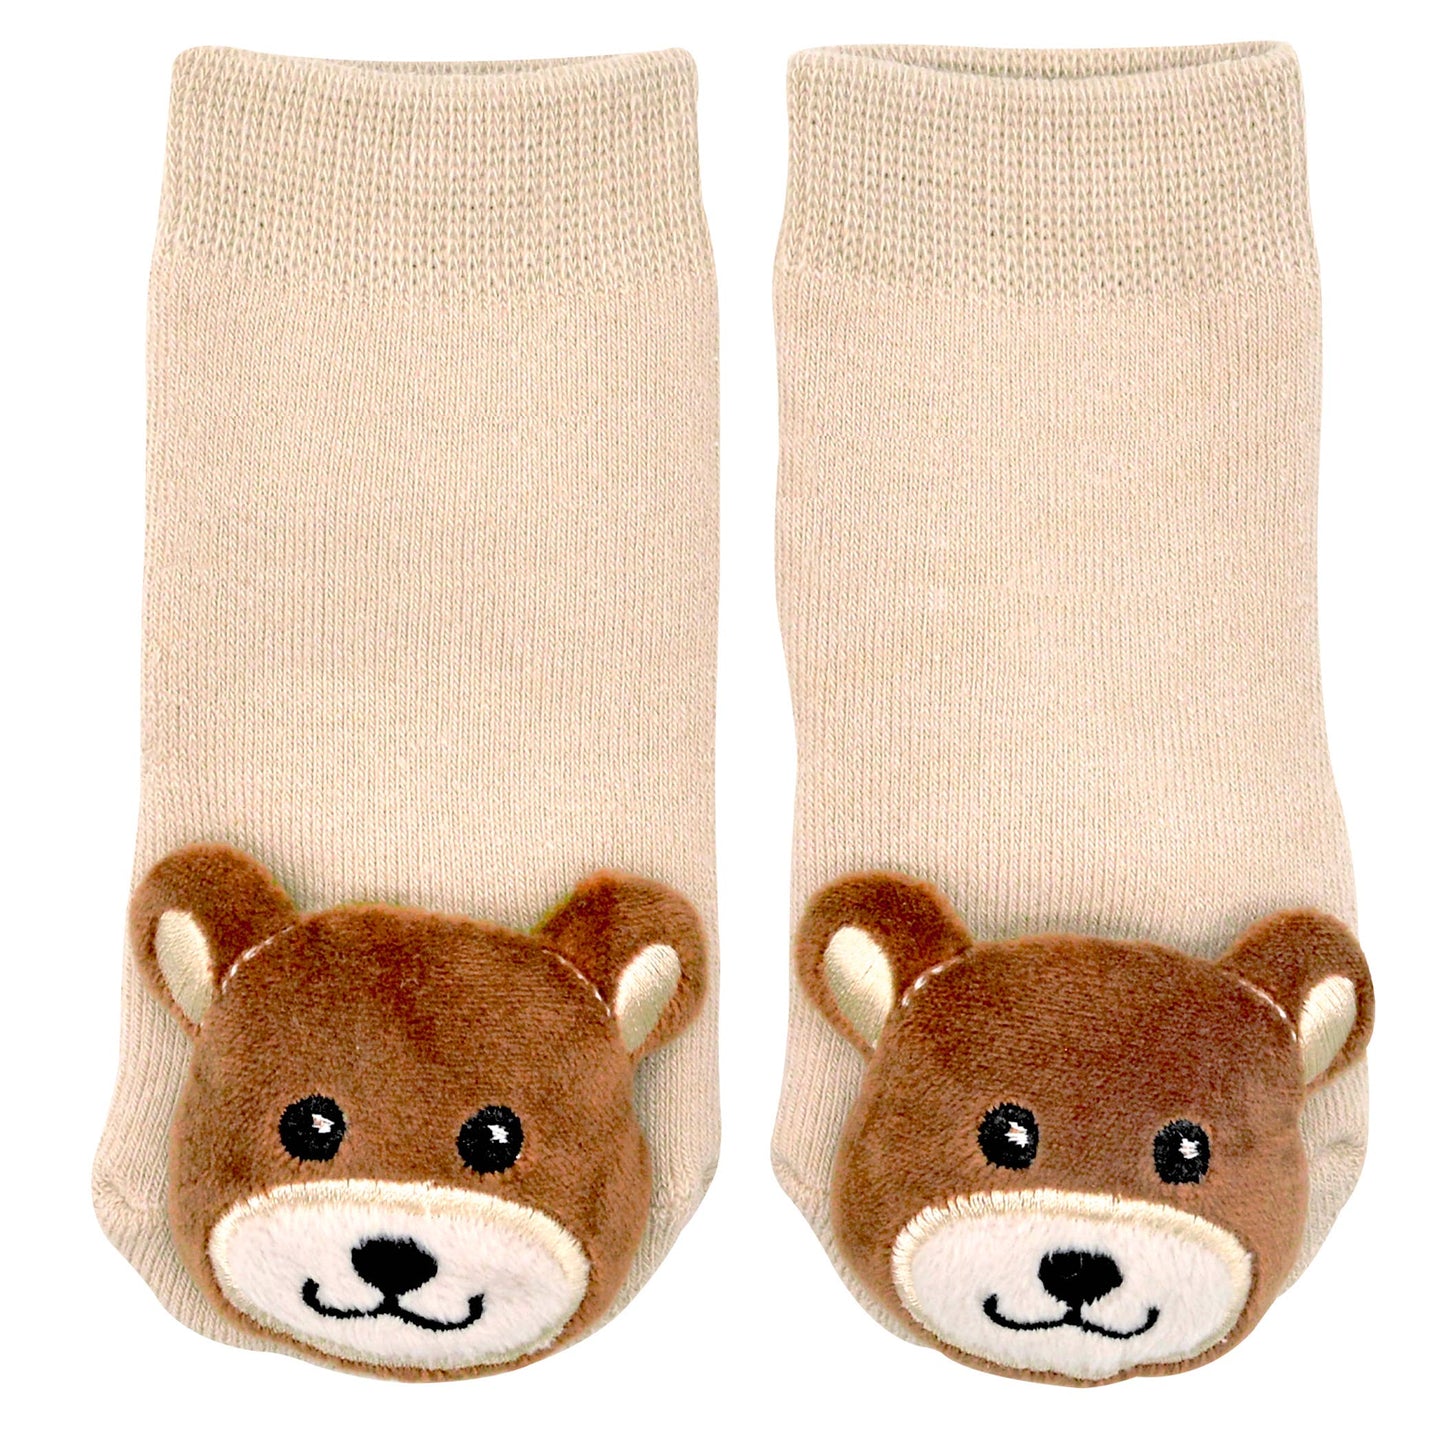 Liventi - Teddy Bear Boogie Toes Rattle Socks